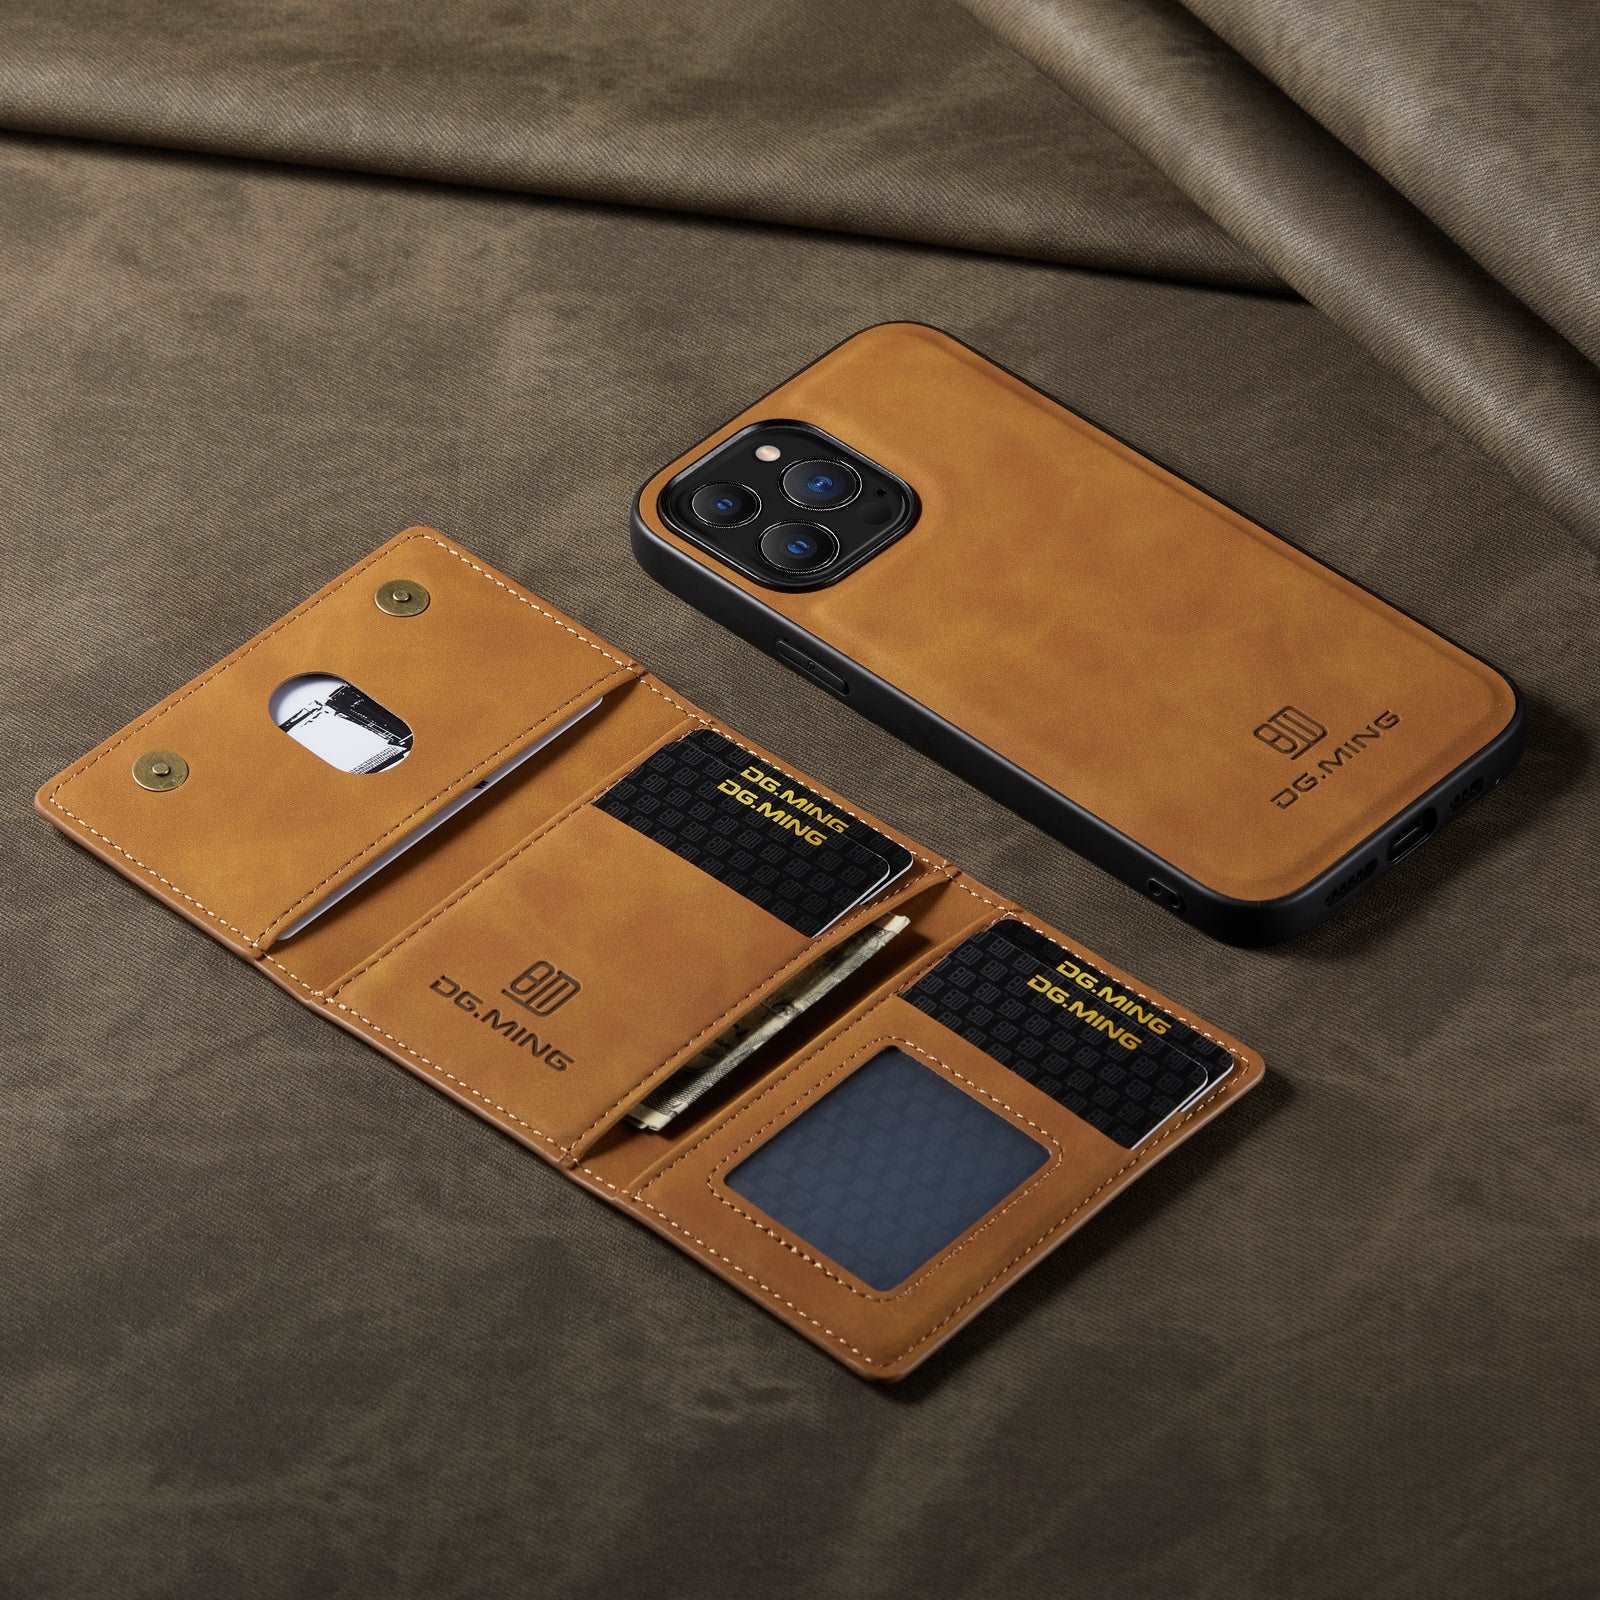 Capa Slim e Carteira de couro vegano magnética exclusiva para IPhone - DG MING 0 karavelas 